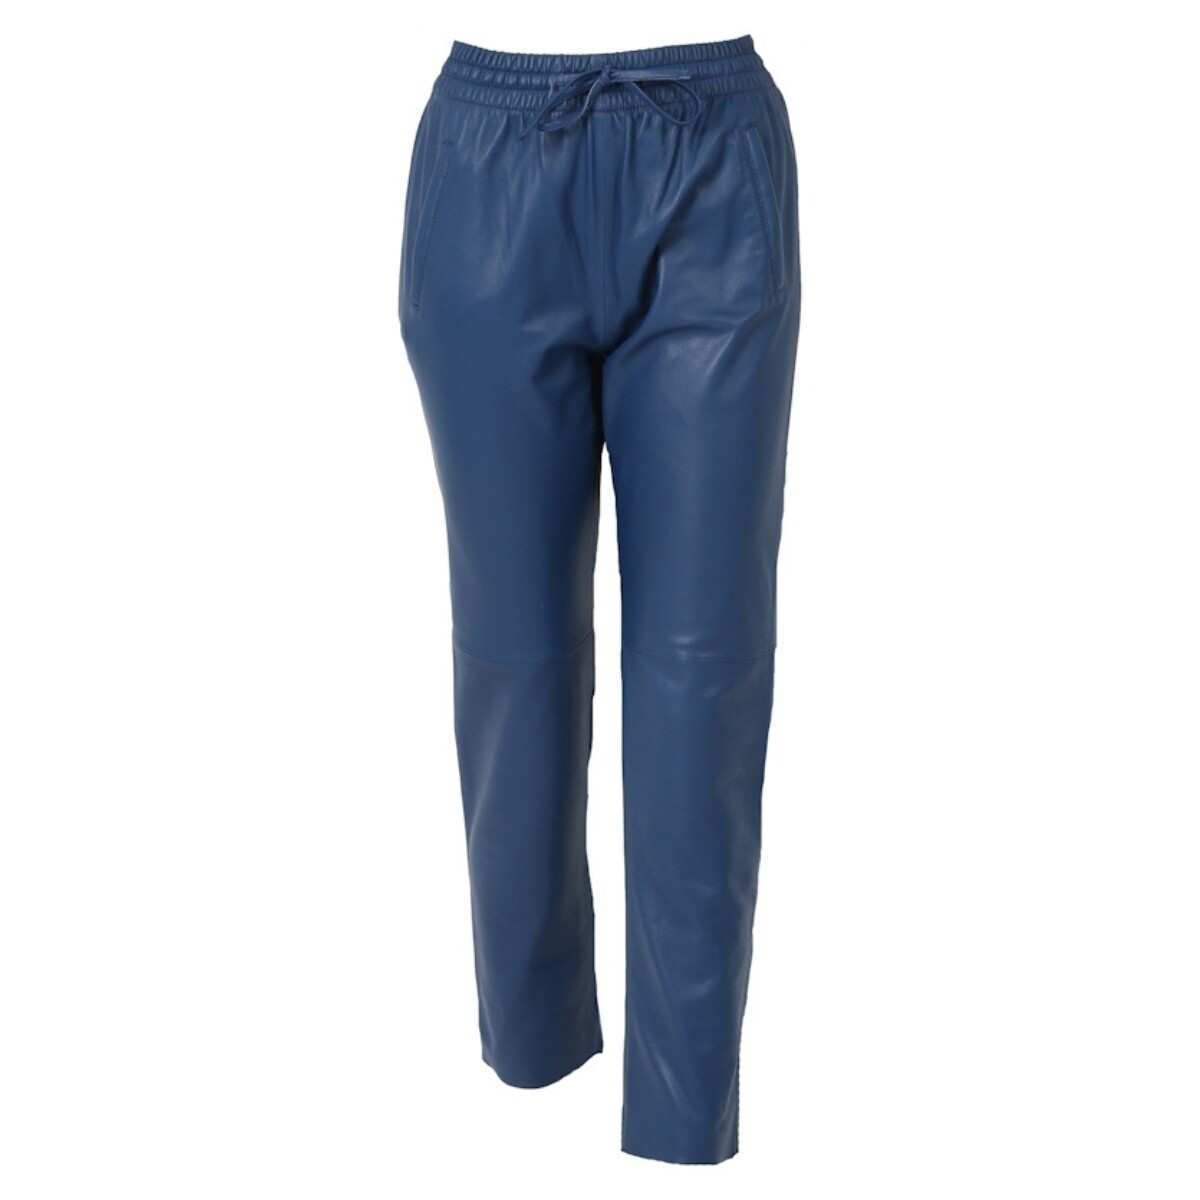 Oakwood Bleu Pantalon jogpant en cuir Gift Ref 50426 Bleu Fonce KddHQvOU